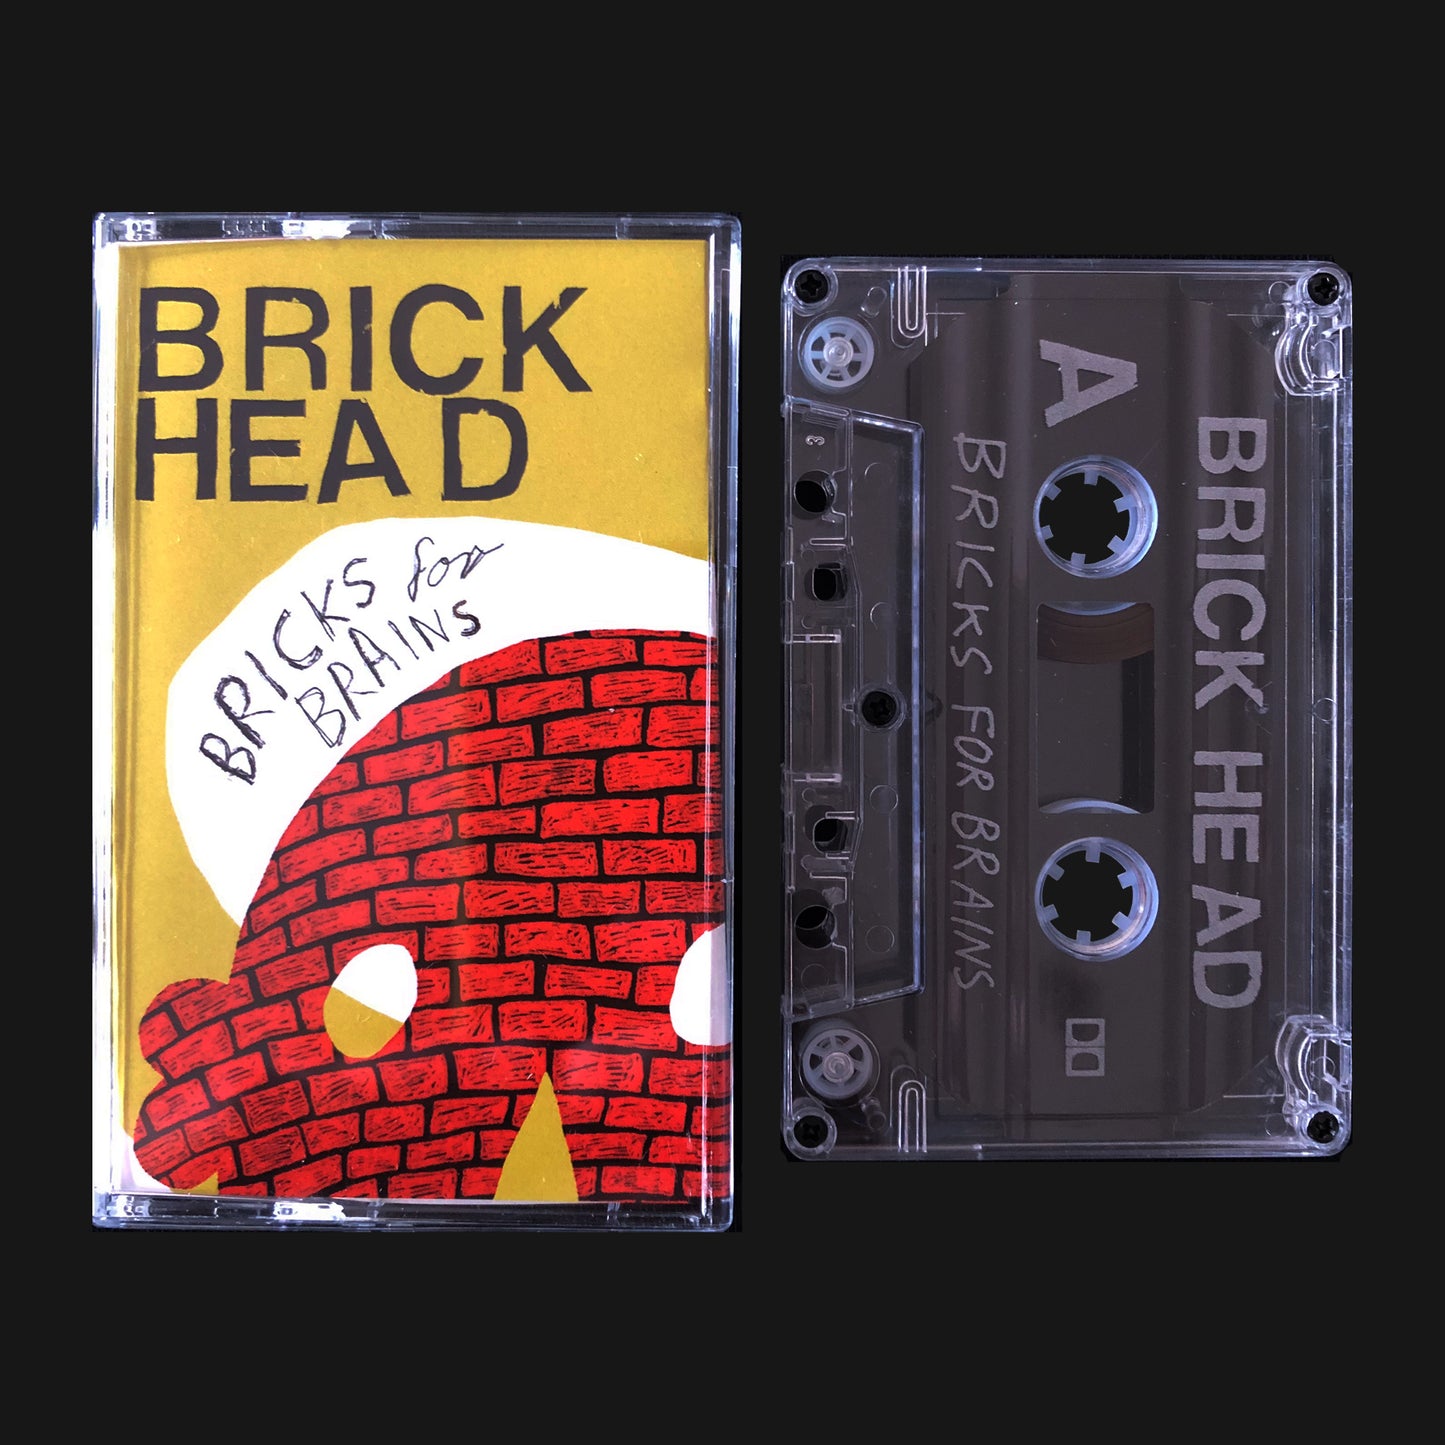 BRICK HEAD - "BRICKS FOR BRAINS" CS